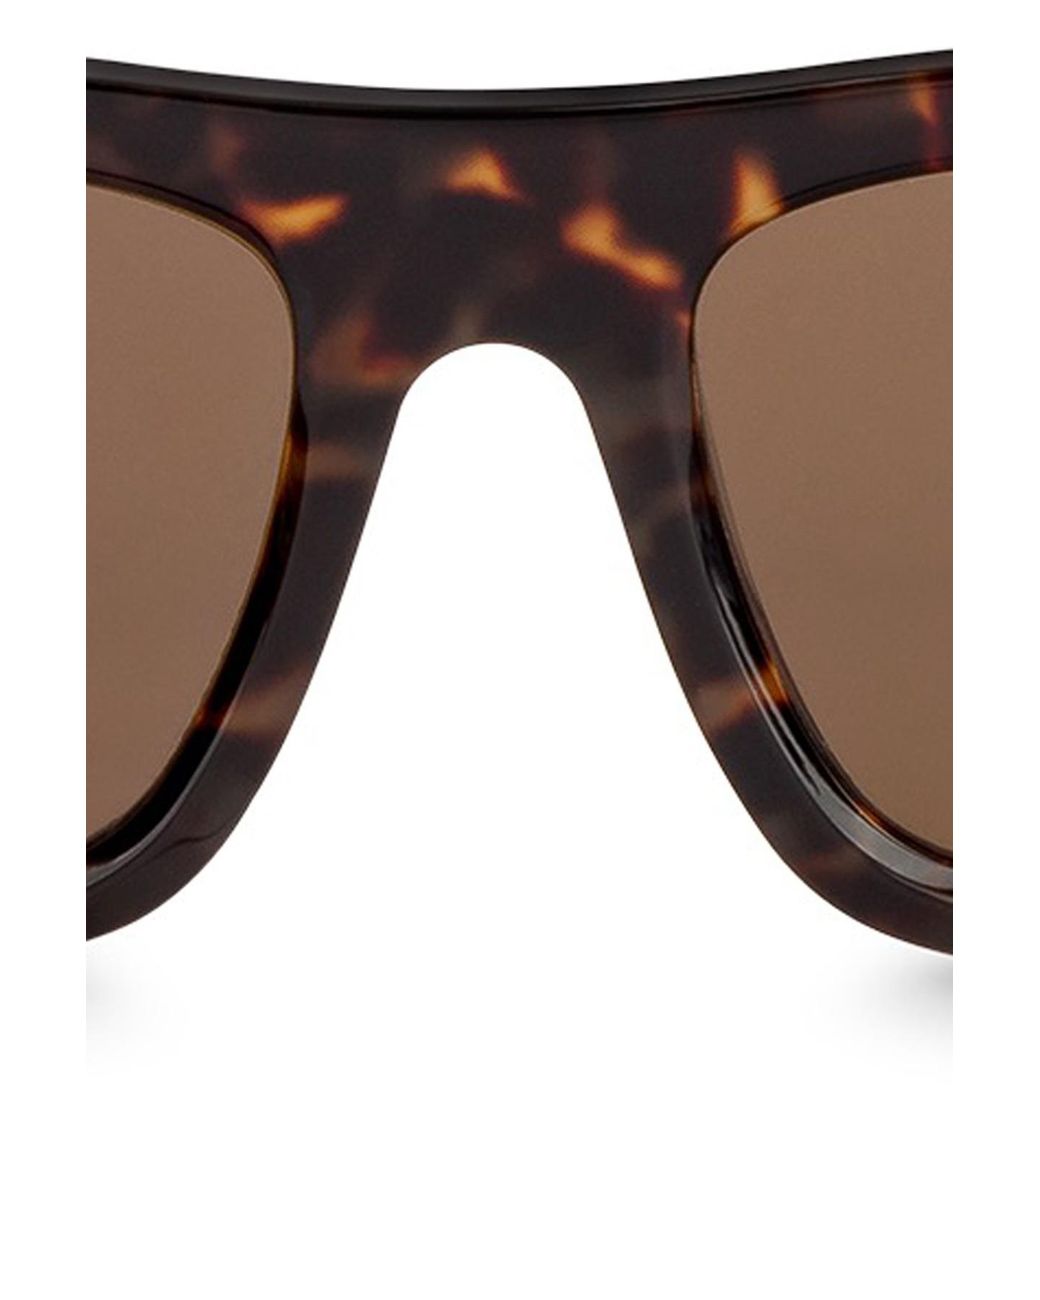 lv sunglasses brown